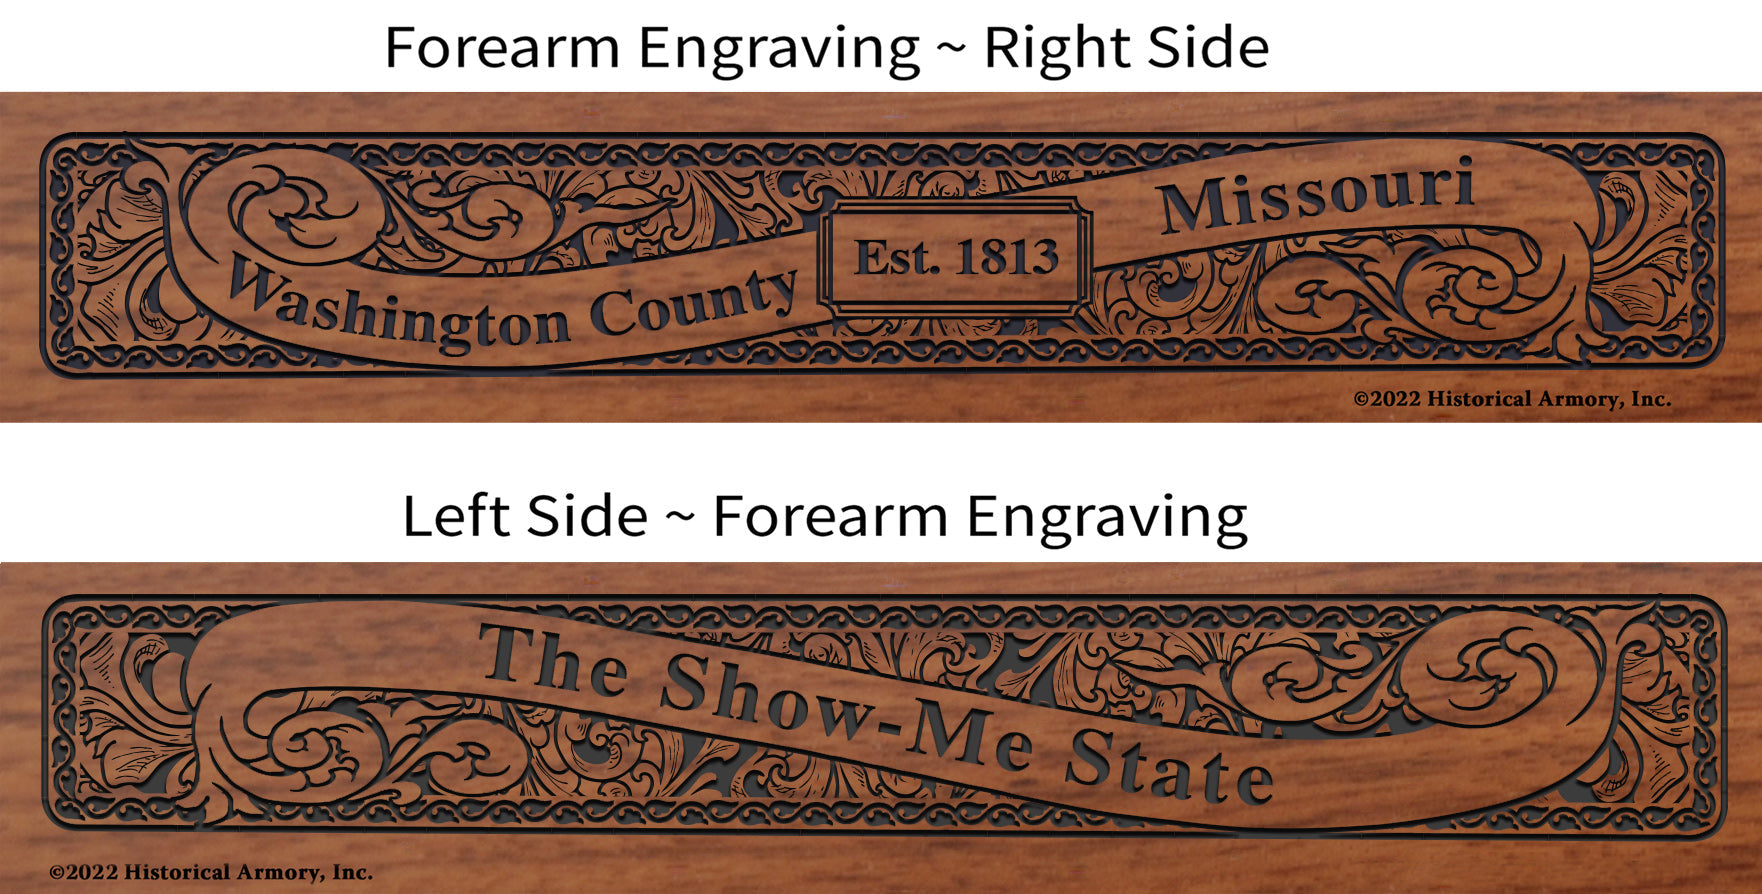 Washington County Missouri Engraved Rifle Forearm